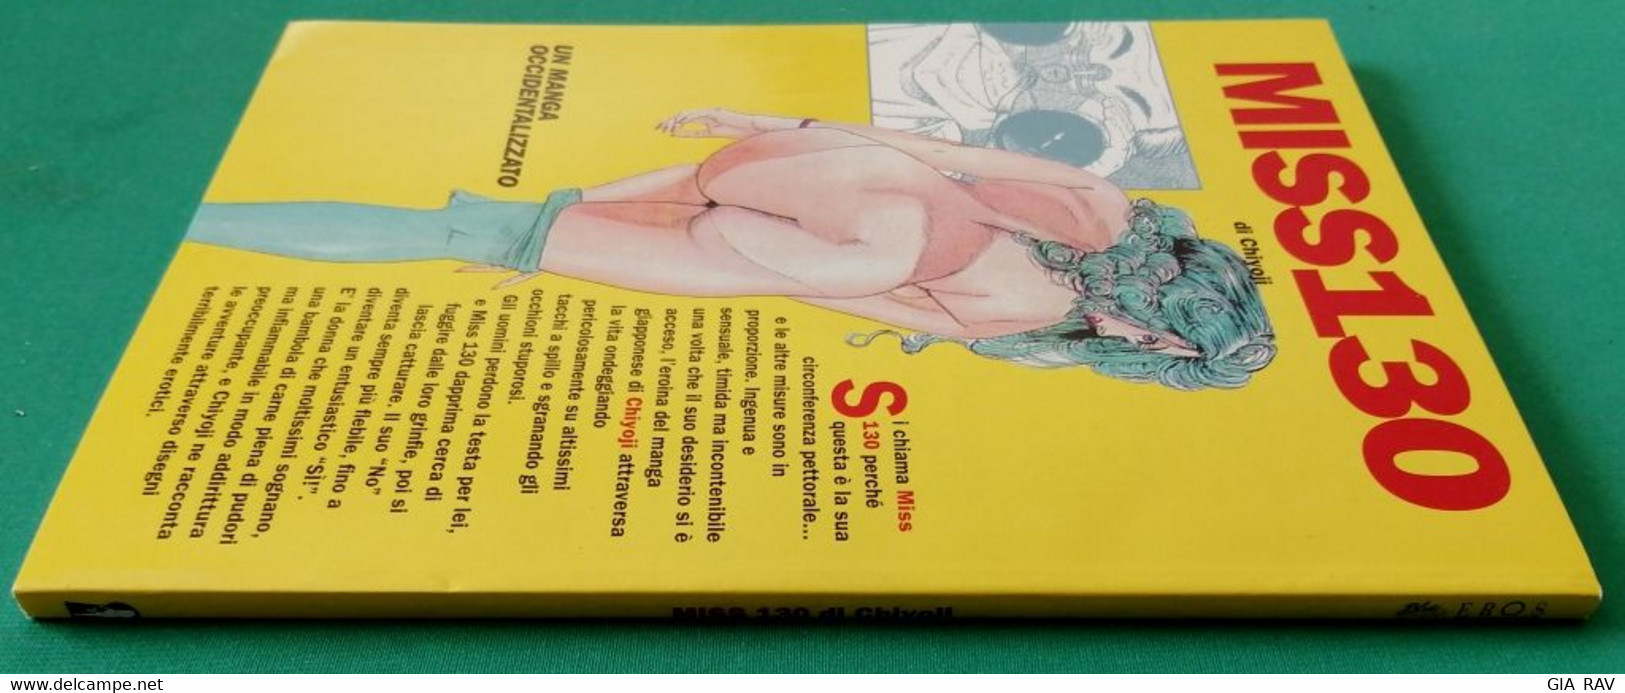 MISS 130 - VOL. UNICO (RARO) - CHIYOJI - BLUE PRESS - V.M. 18 ANNI - Manga